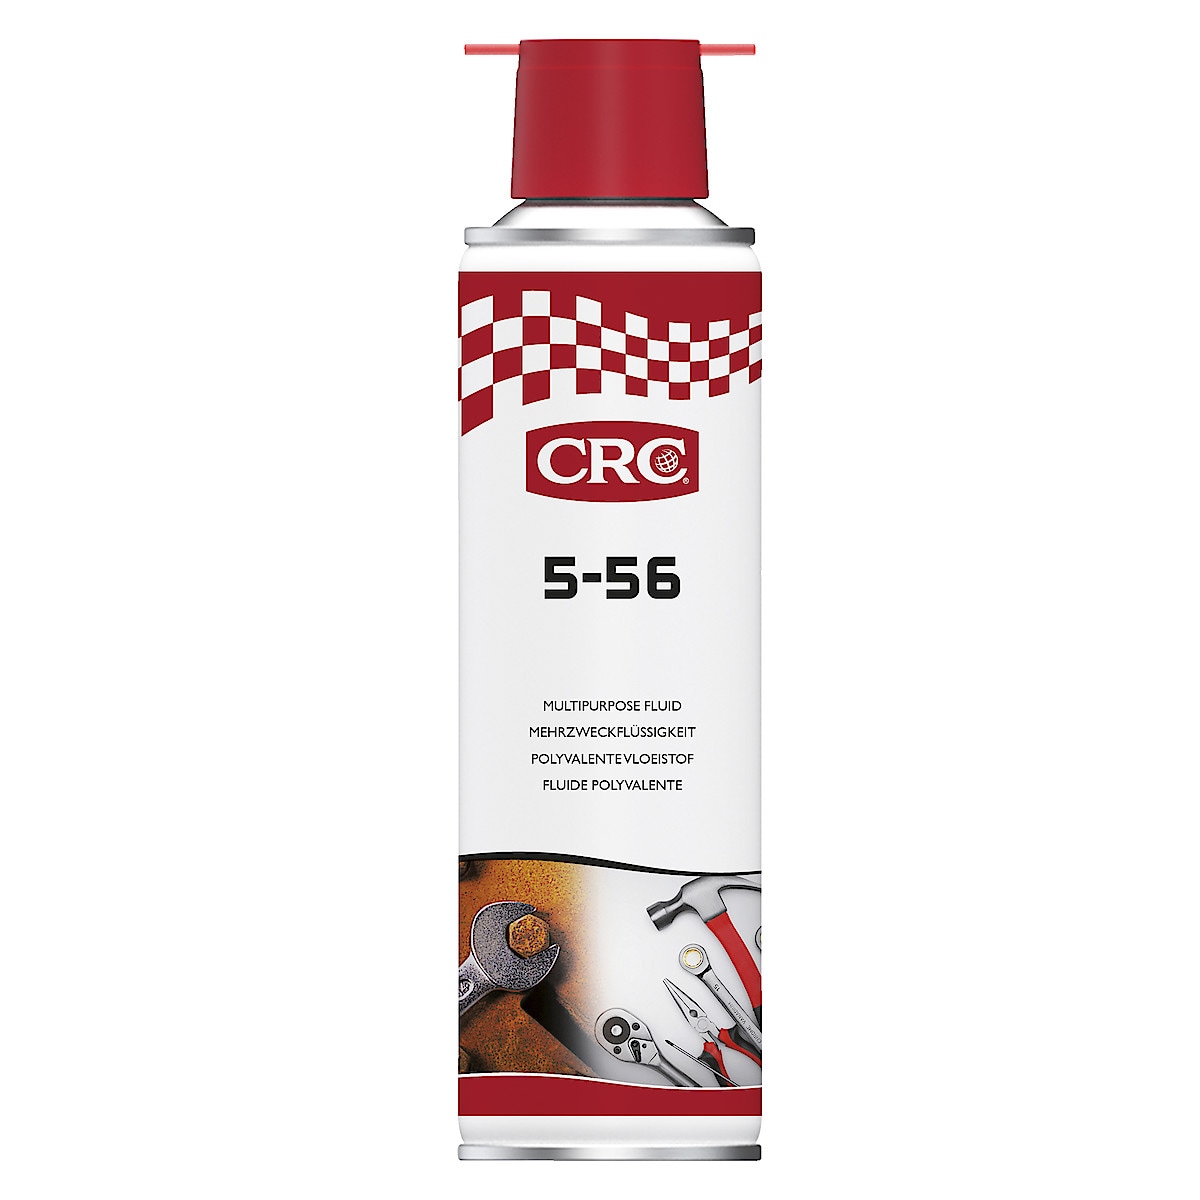 Rostlösare CRC 5-56, 250 ml